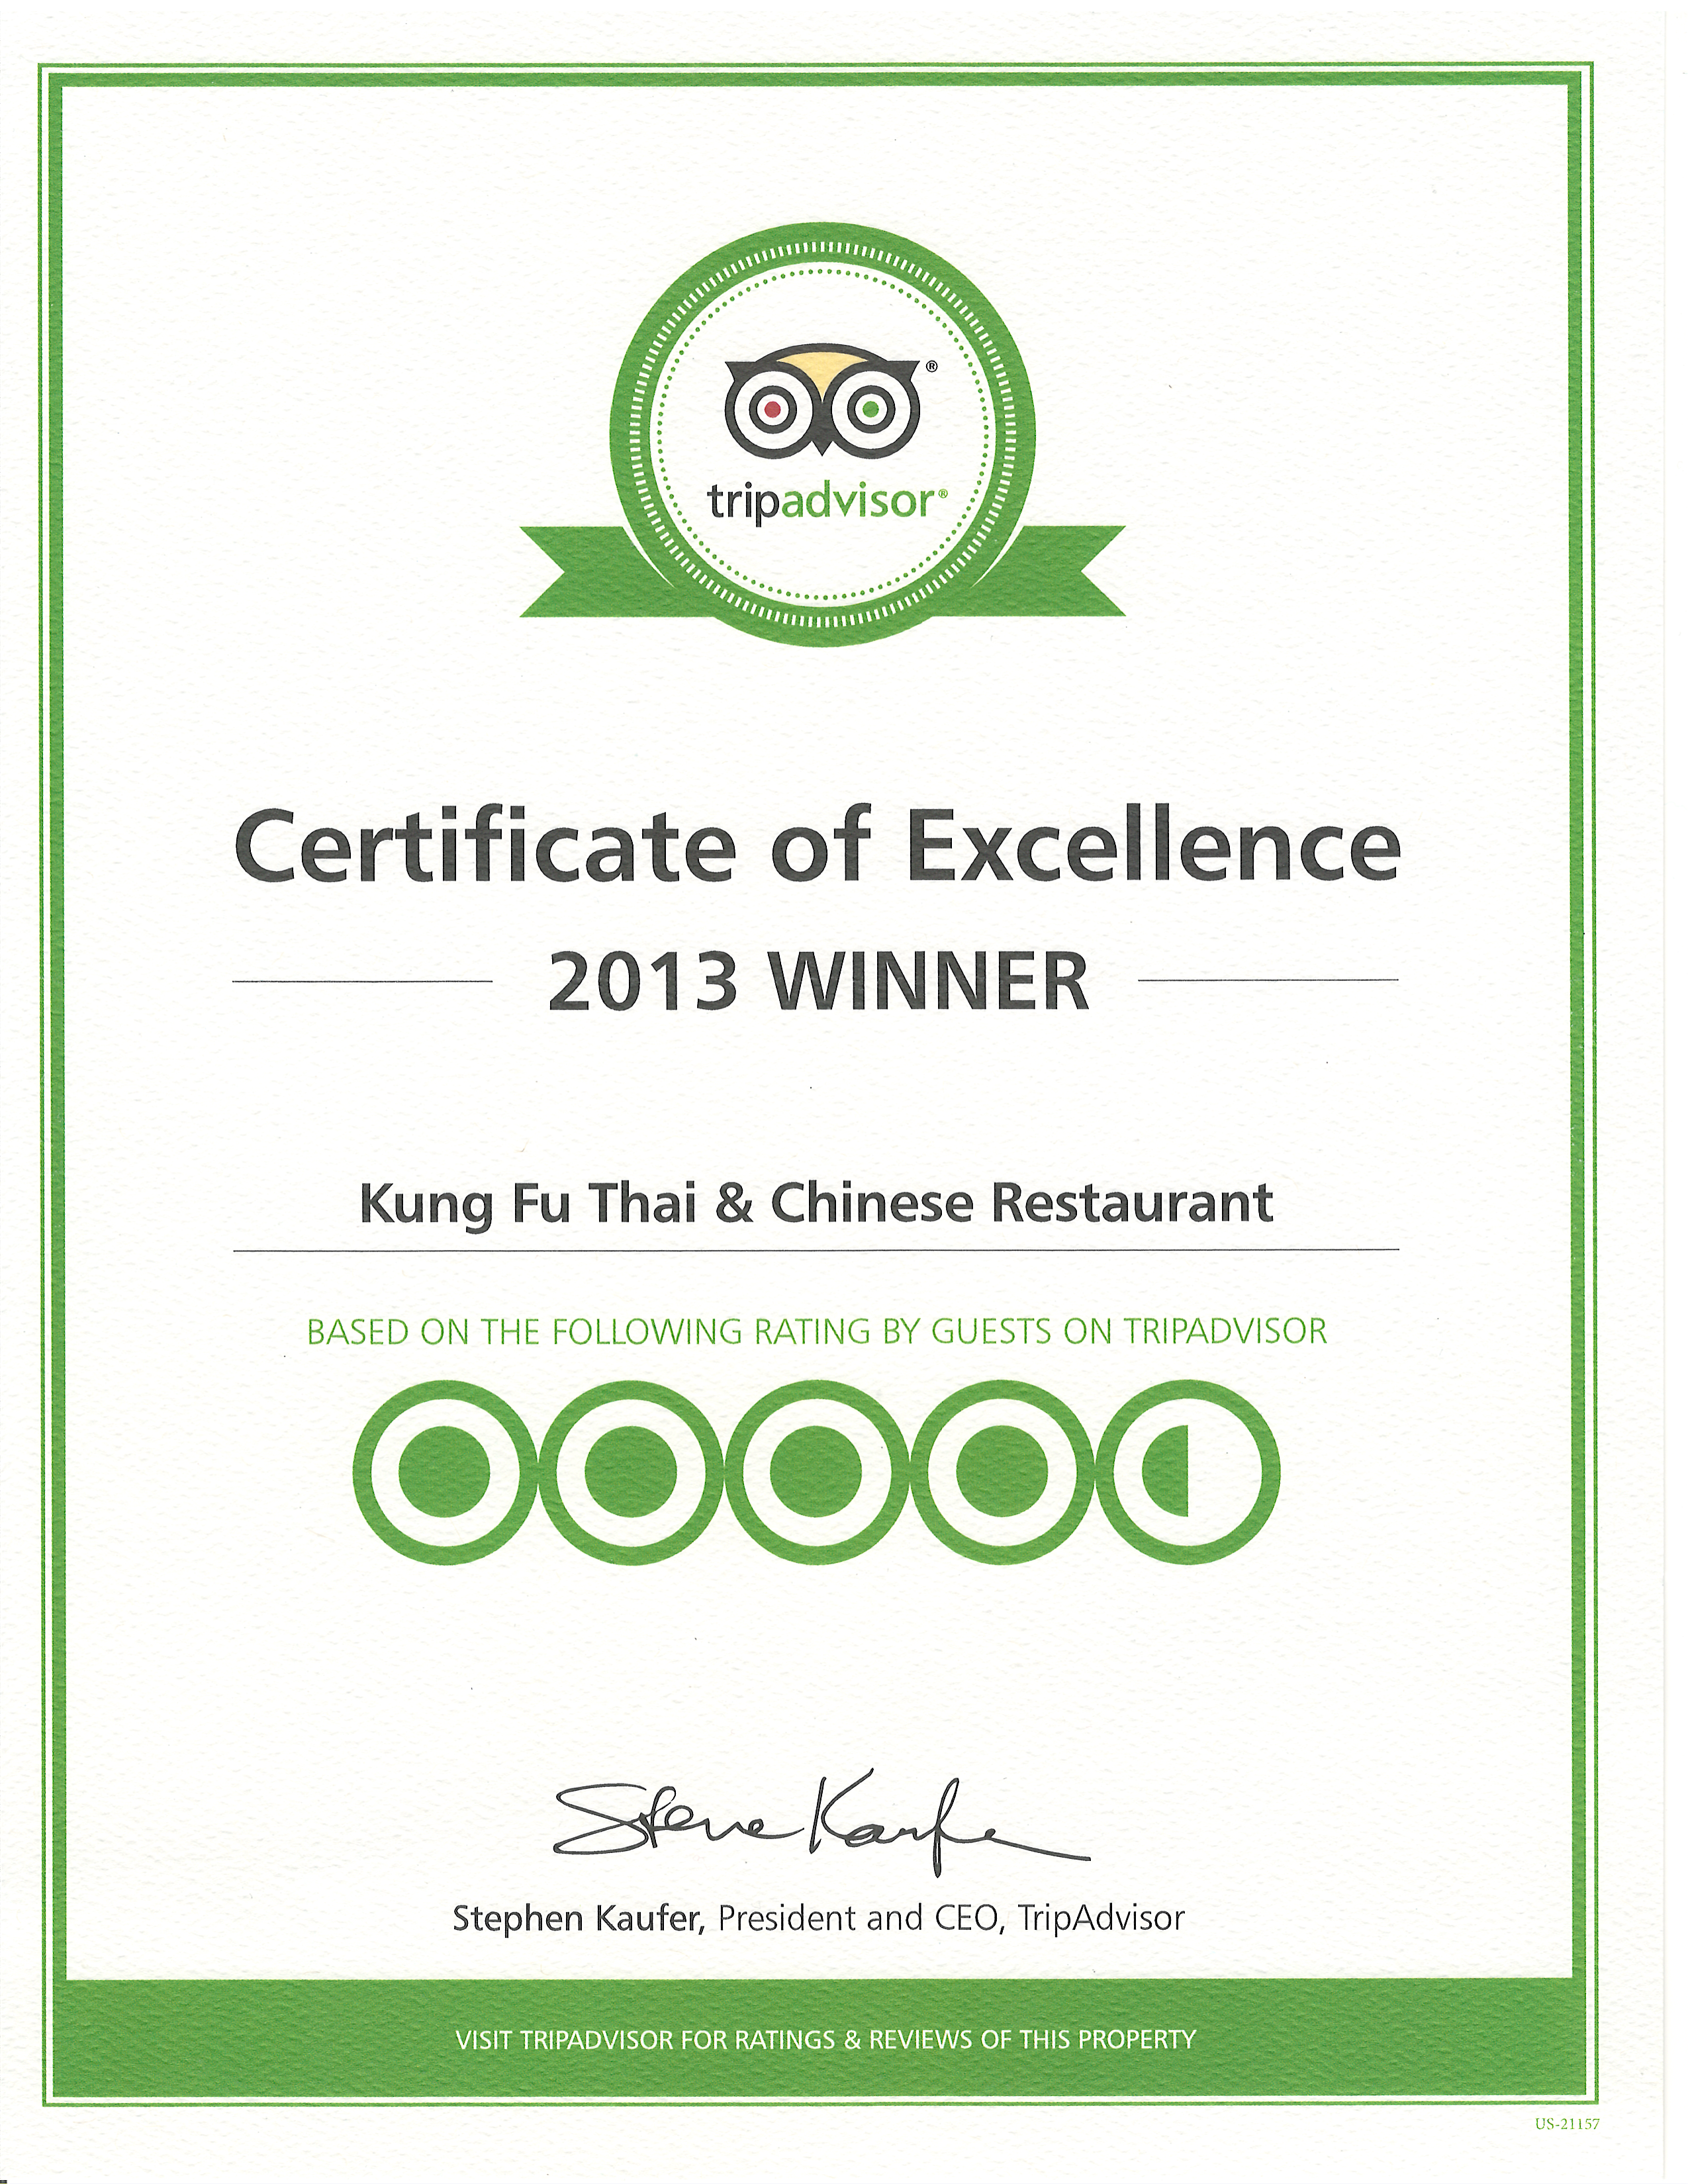 Delicious Restaurants in Las Vegas Kung Fu Thai Restaurant TripAdvisor-2013-Certificate-of-Excellence-Winner-Badge